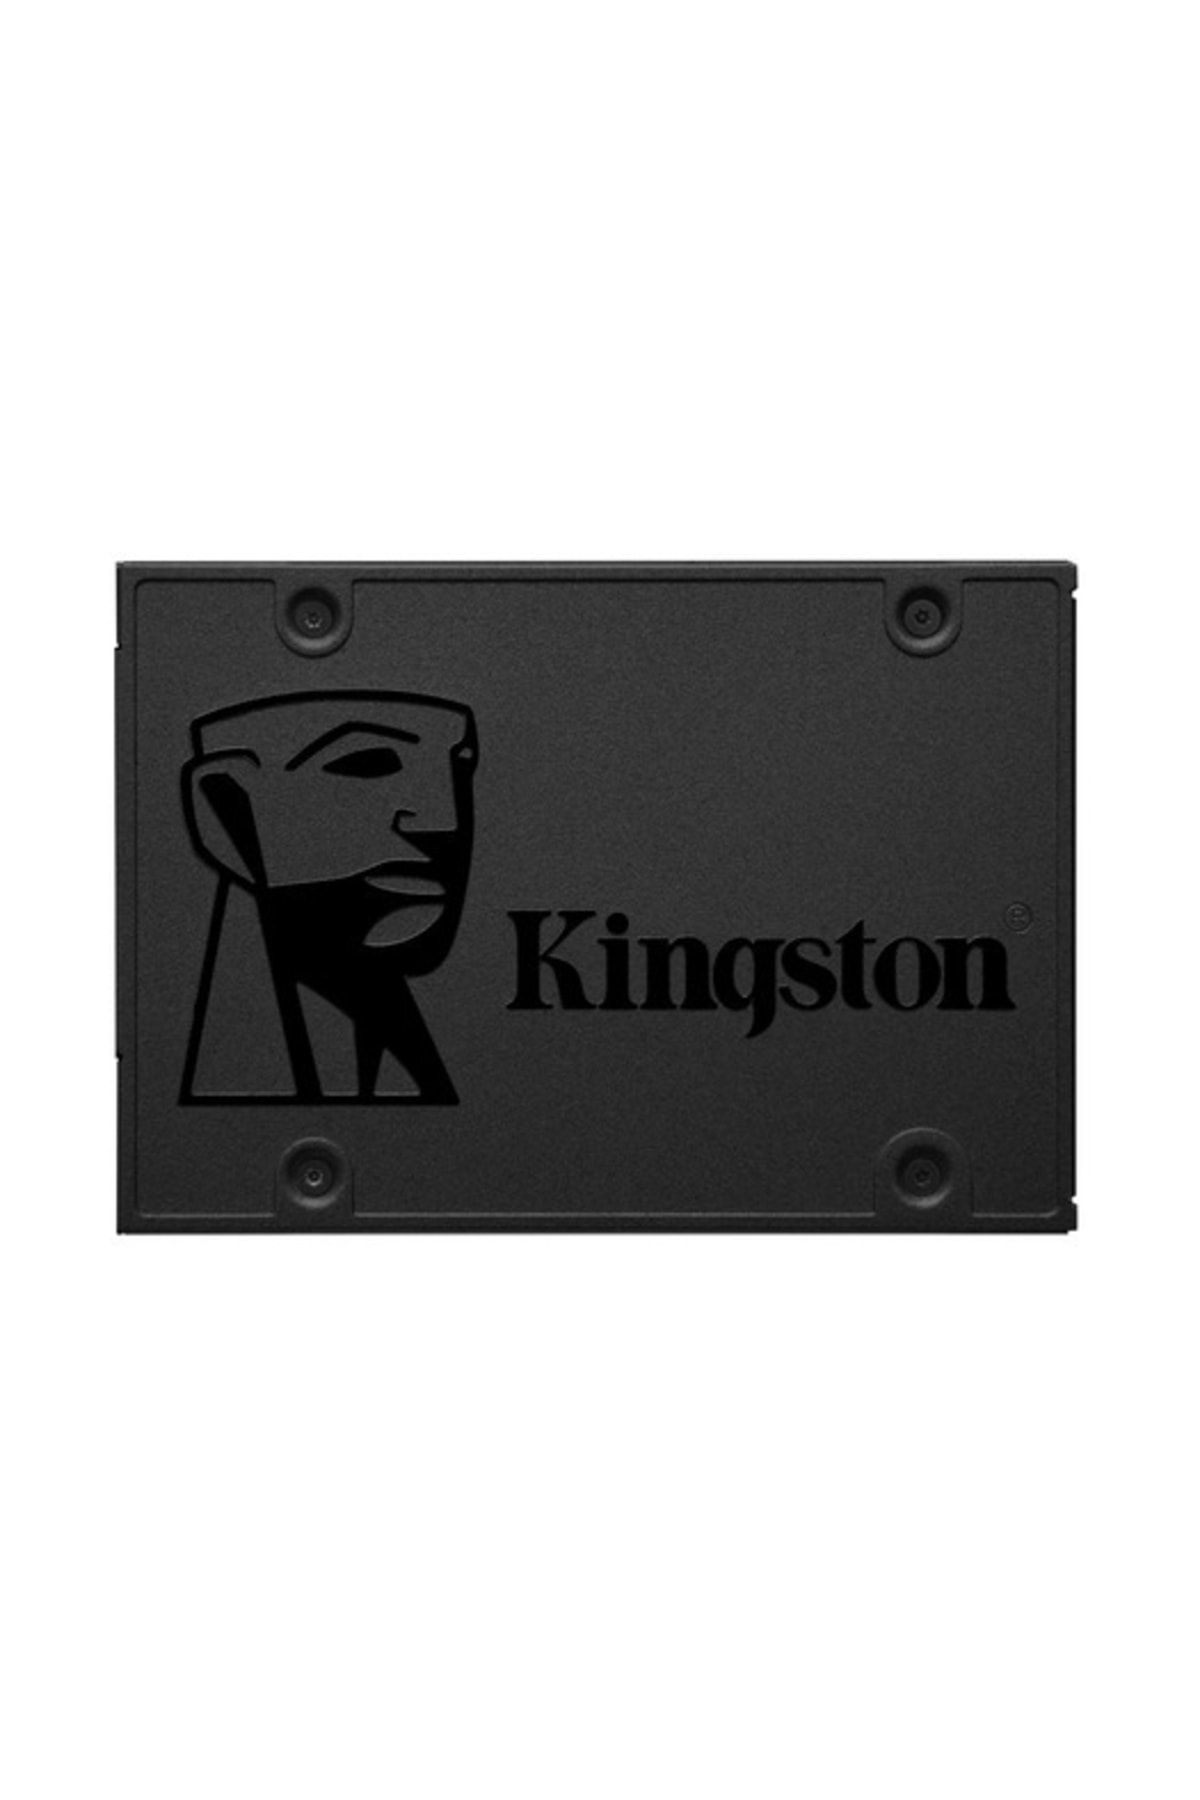 Kingston 480gb A400 Sata3 2.5 Ssd